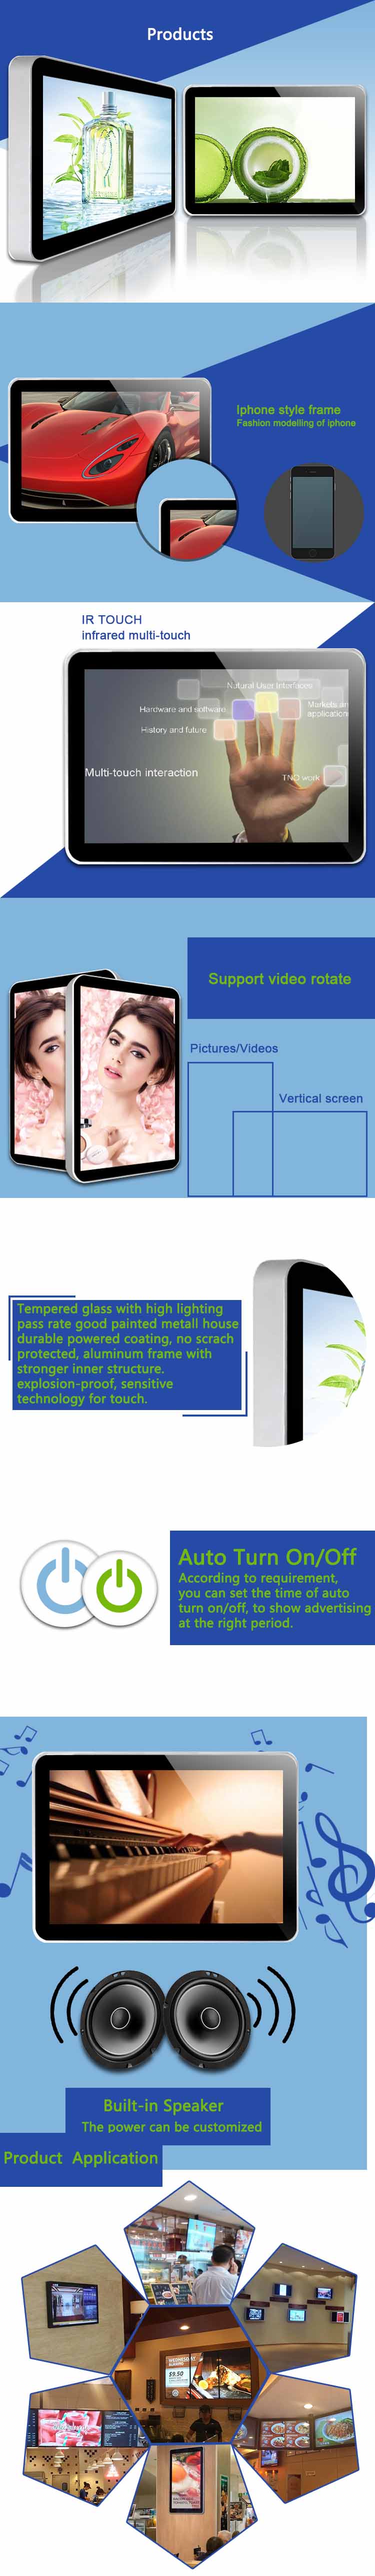 MWE801 Wall Mount Iphone & Ipad Advertising Display